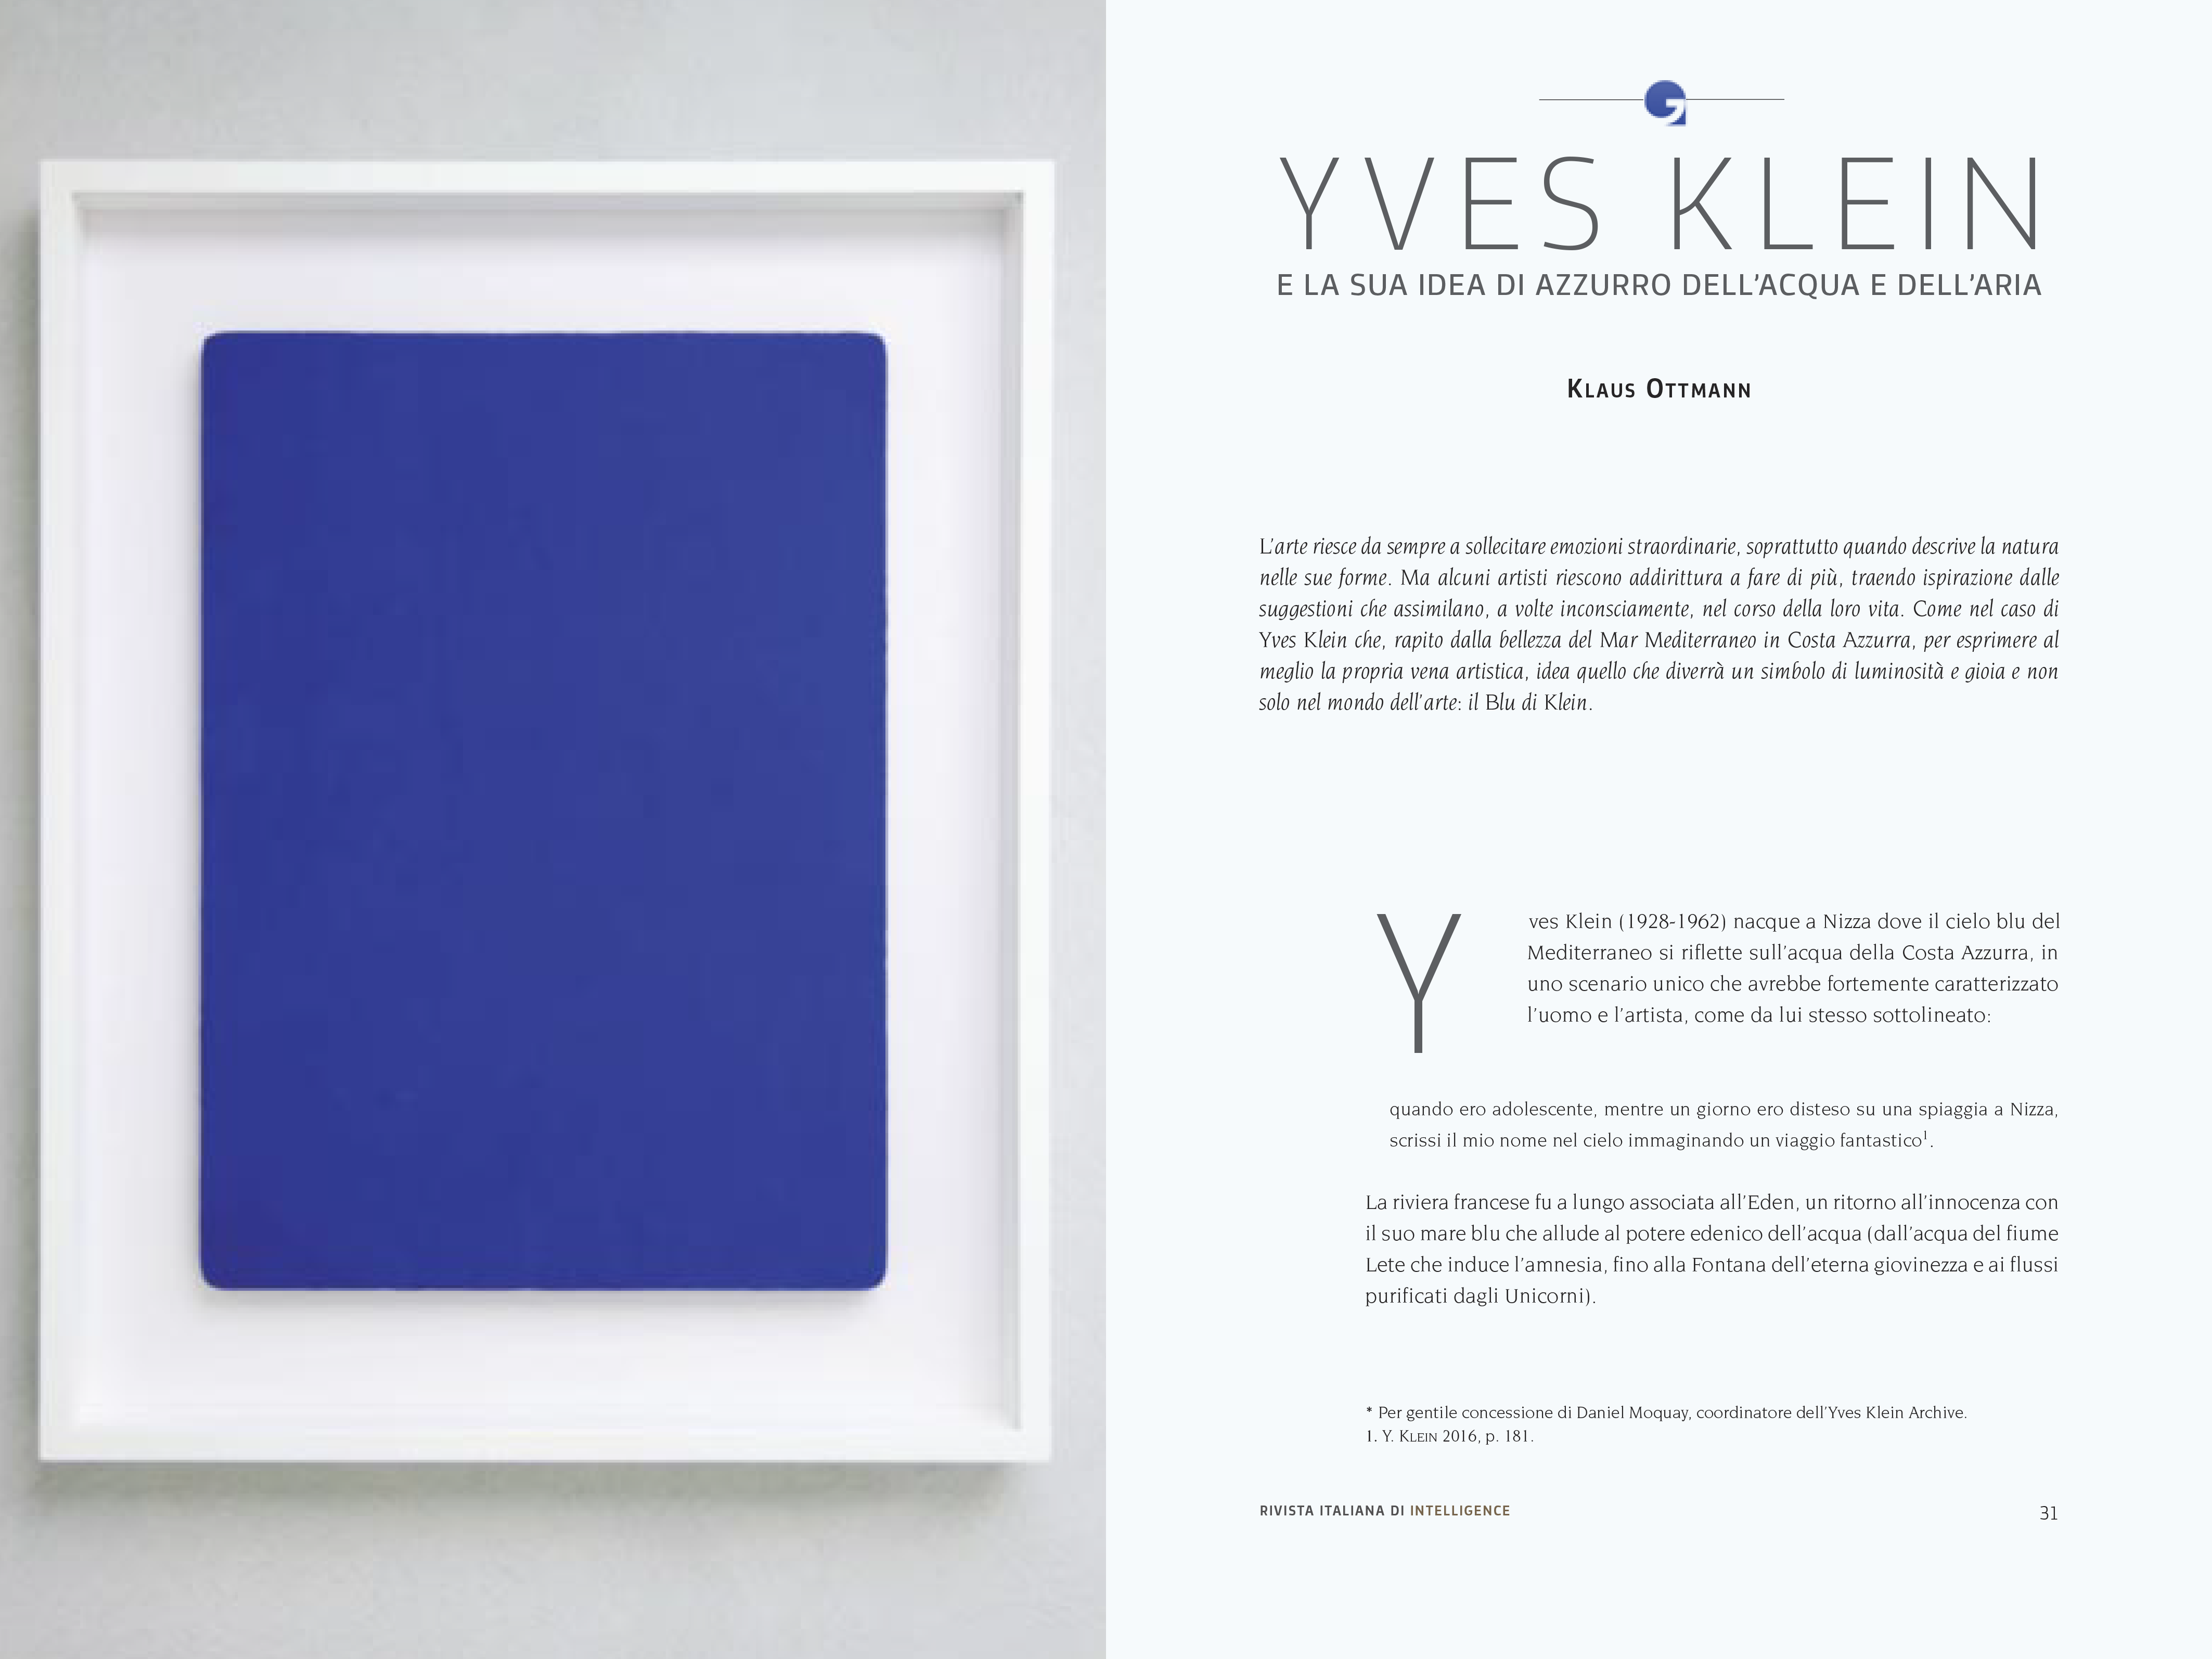 Gnosis article on Yves Klein